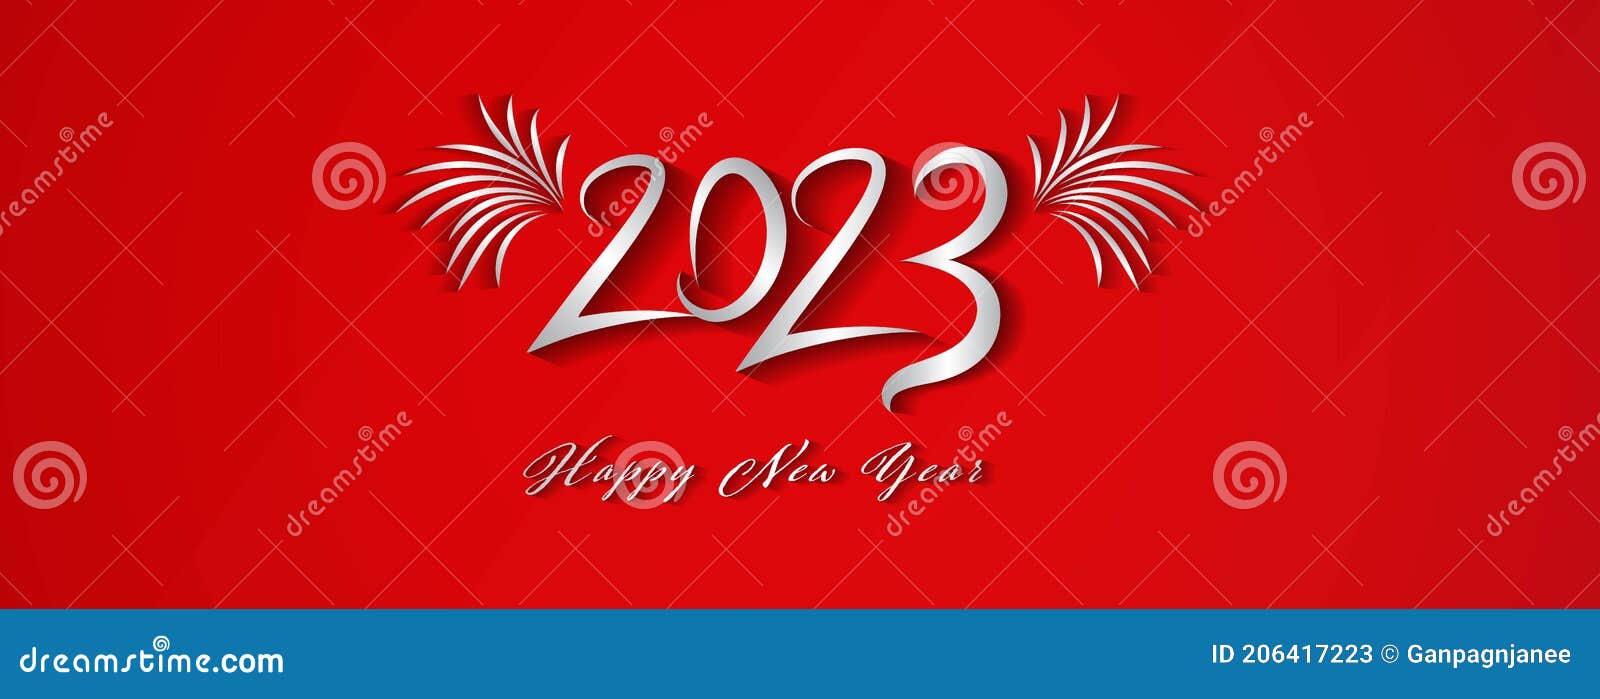 2023 Happy New Year Banner Vector For Social Media Web Banner 2023 Text Design Stock Vector Illustration Of Calendar Media 206417223